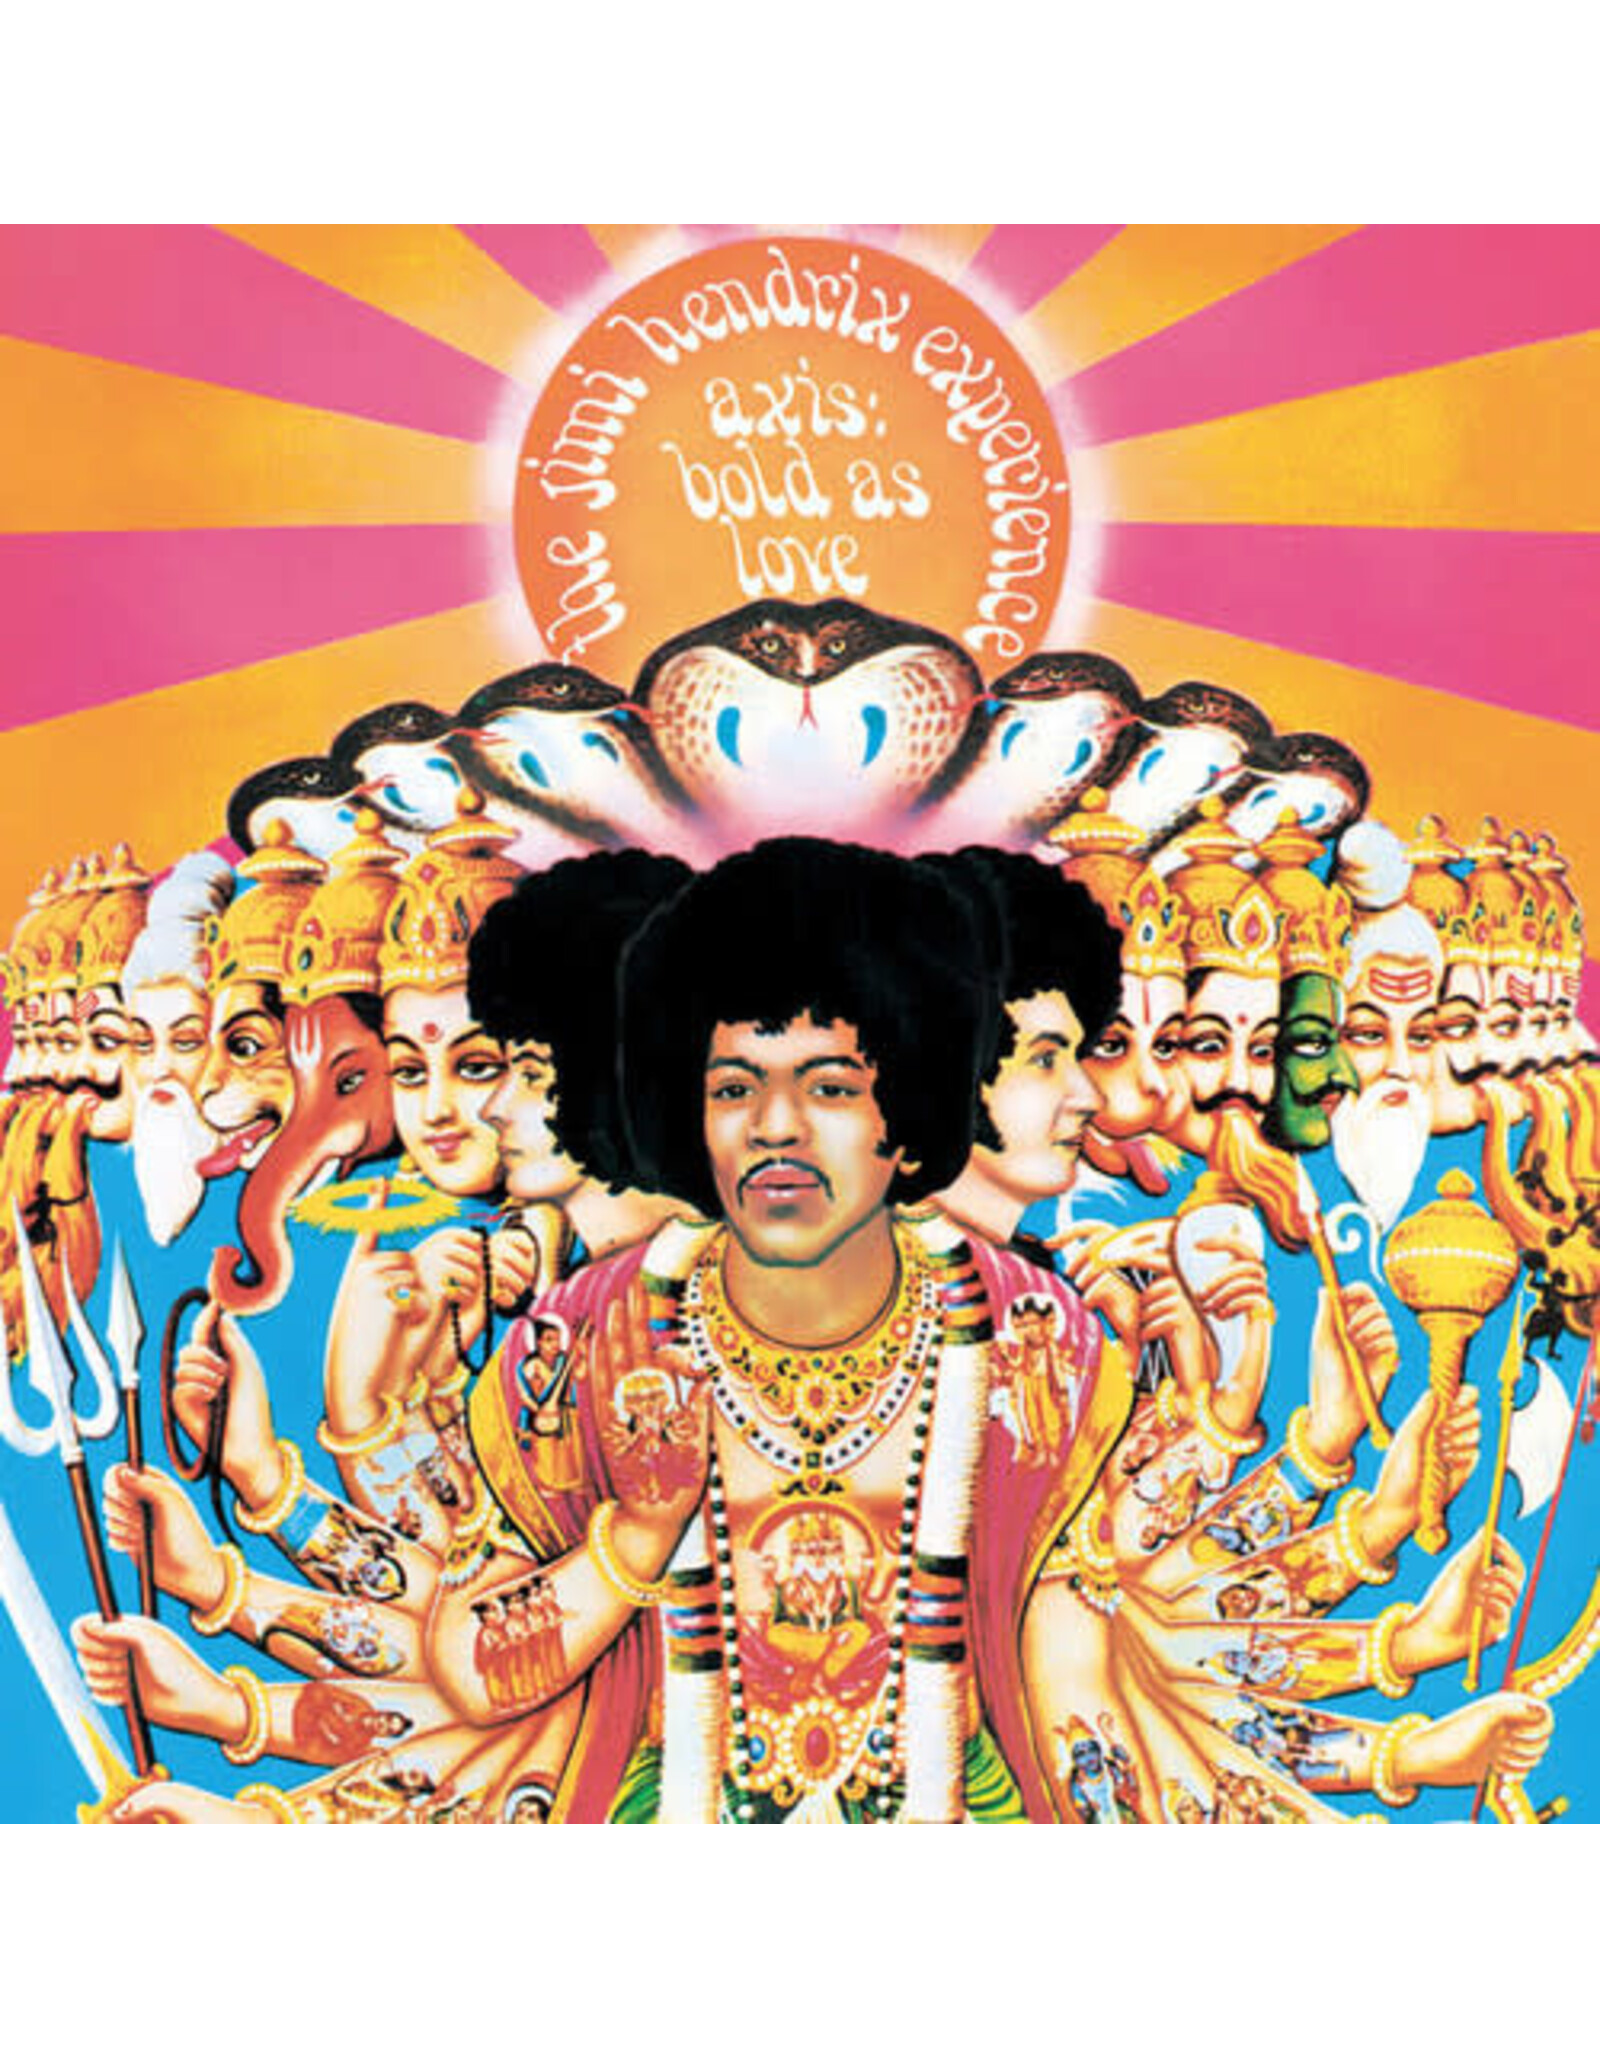 Hendrix, Jimi / Axis: Bold As Love (180g Mono)